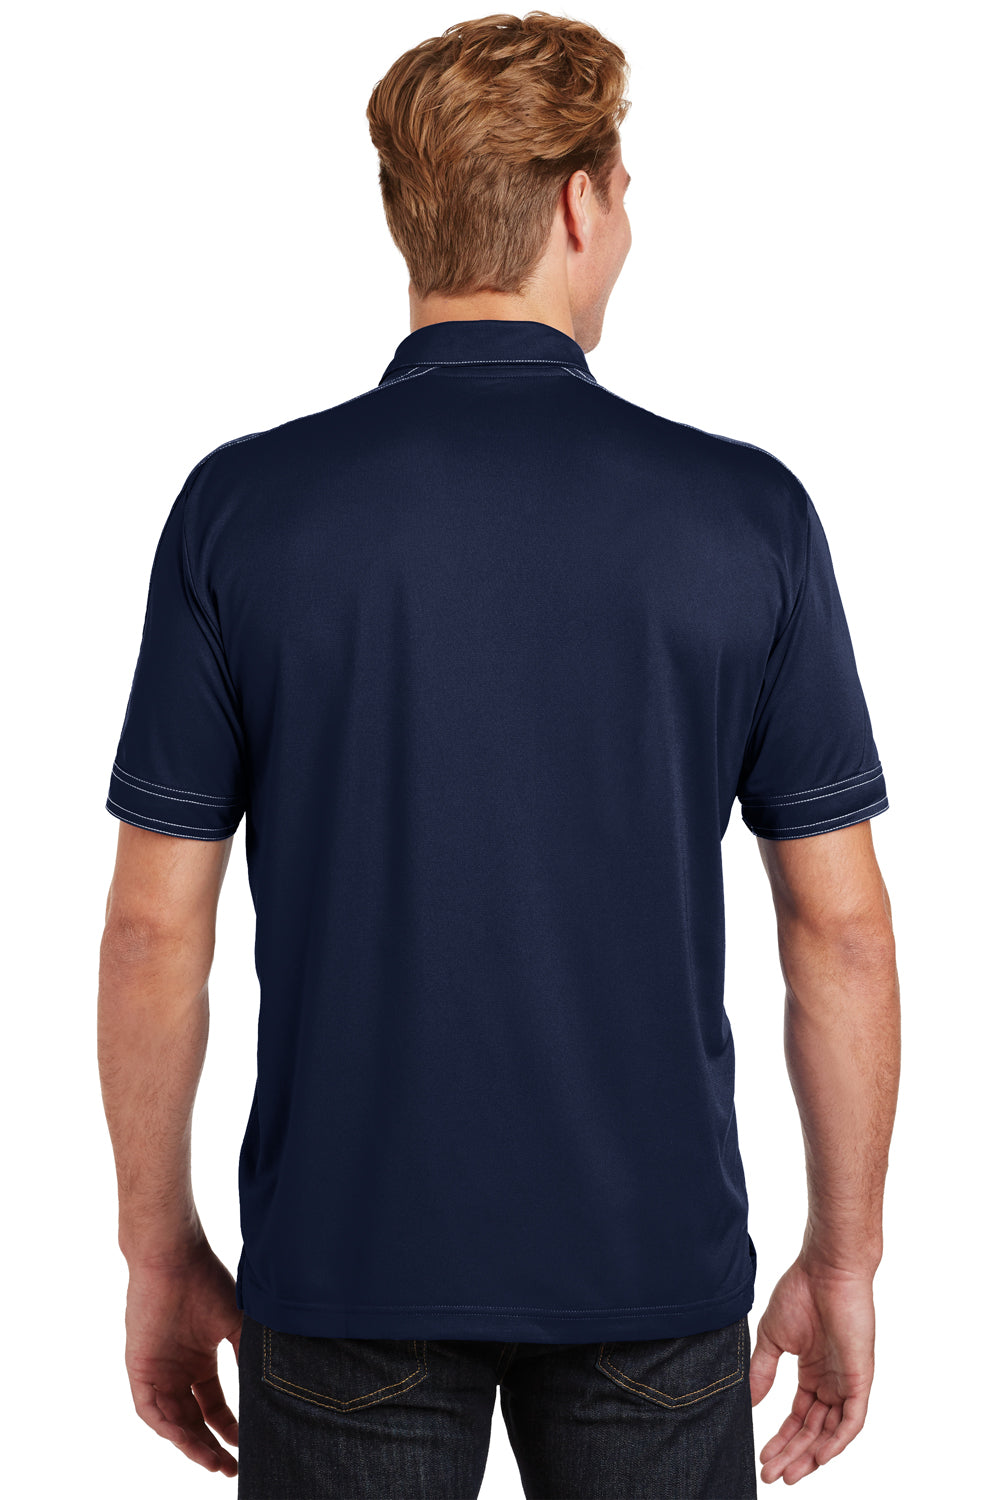 Sport-Tek ST659 Mens Sport-Wick Moisture Wicking Short Sleeve Polo Shirt Navy Blue Back